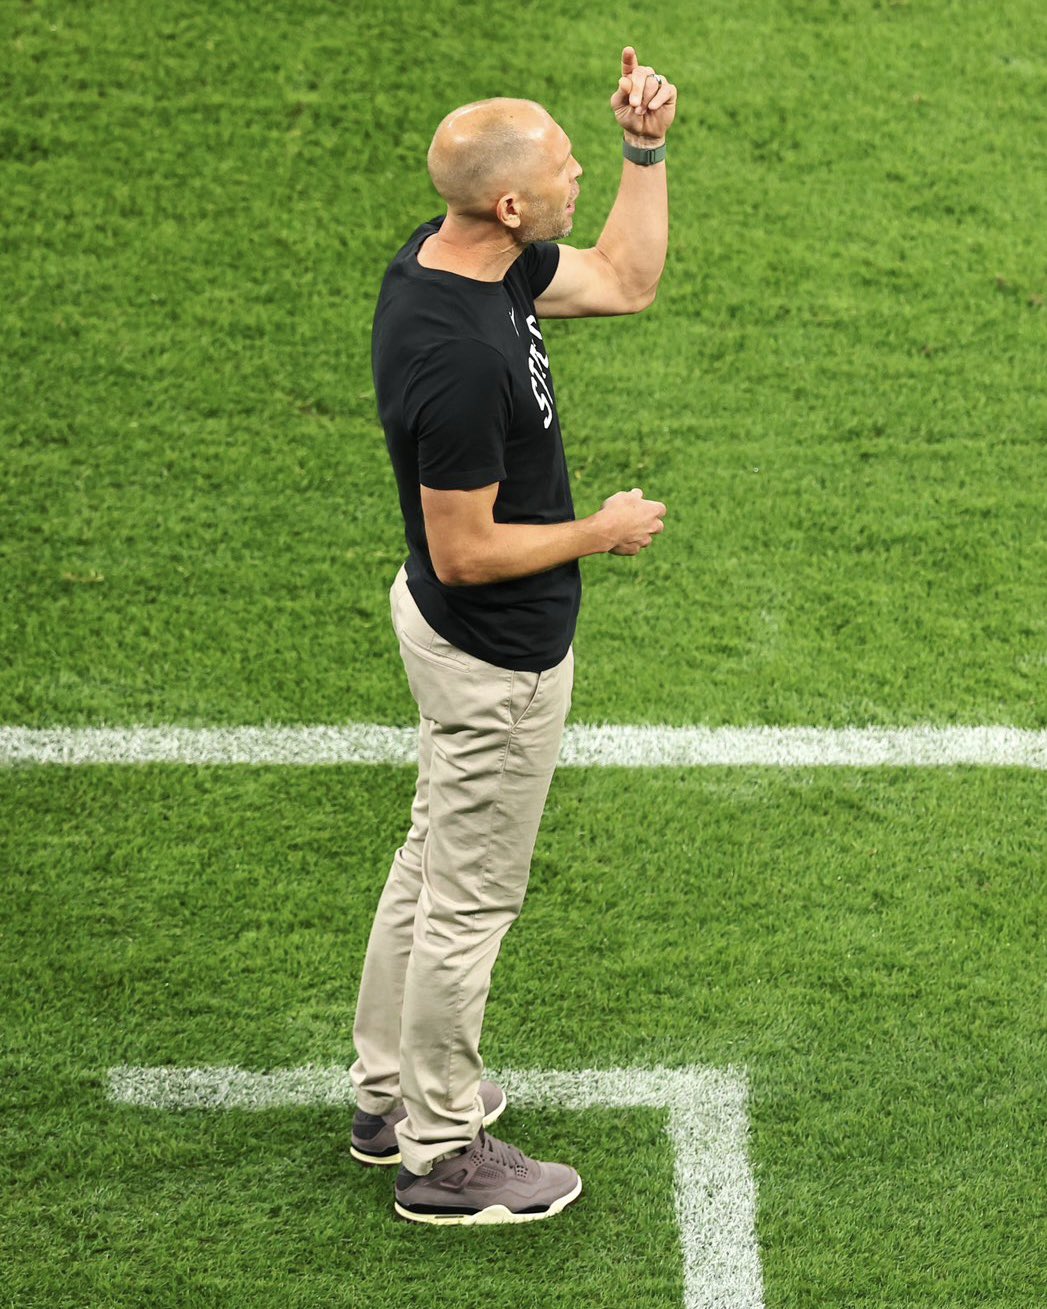 Nice Kicks on X: .@USMNT Head Coach Gregg Berhalter is rockin